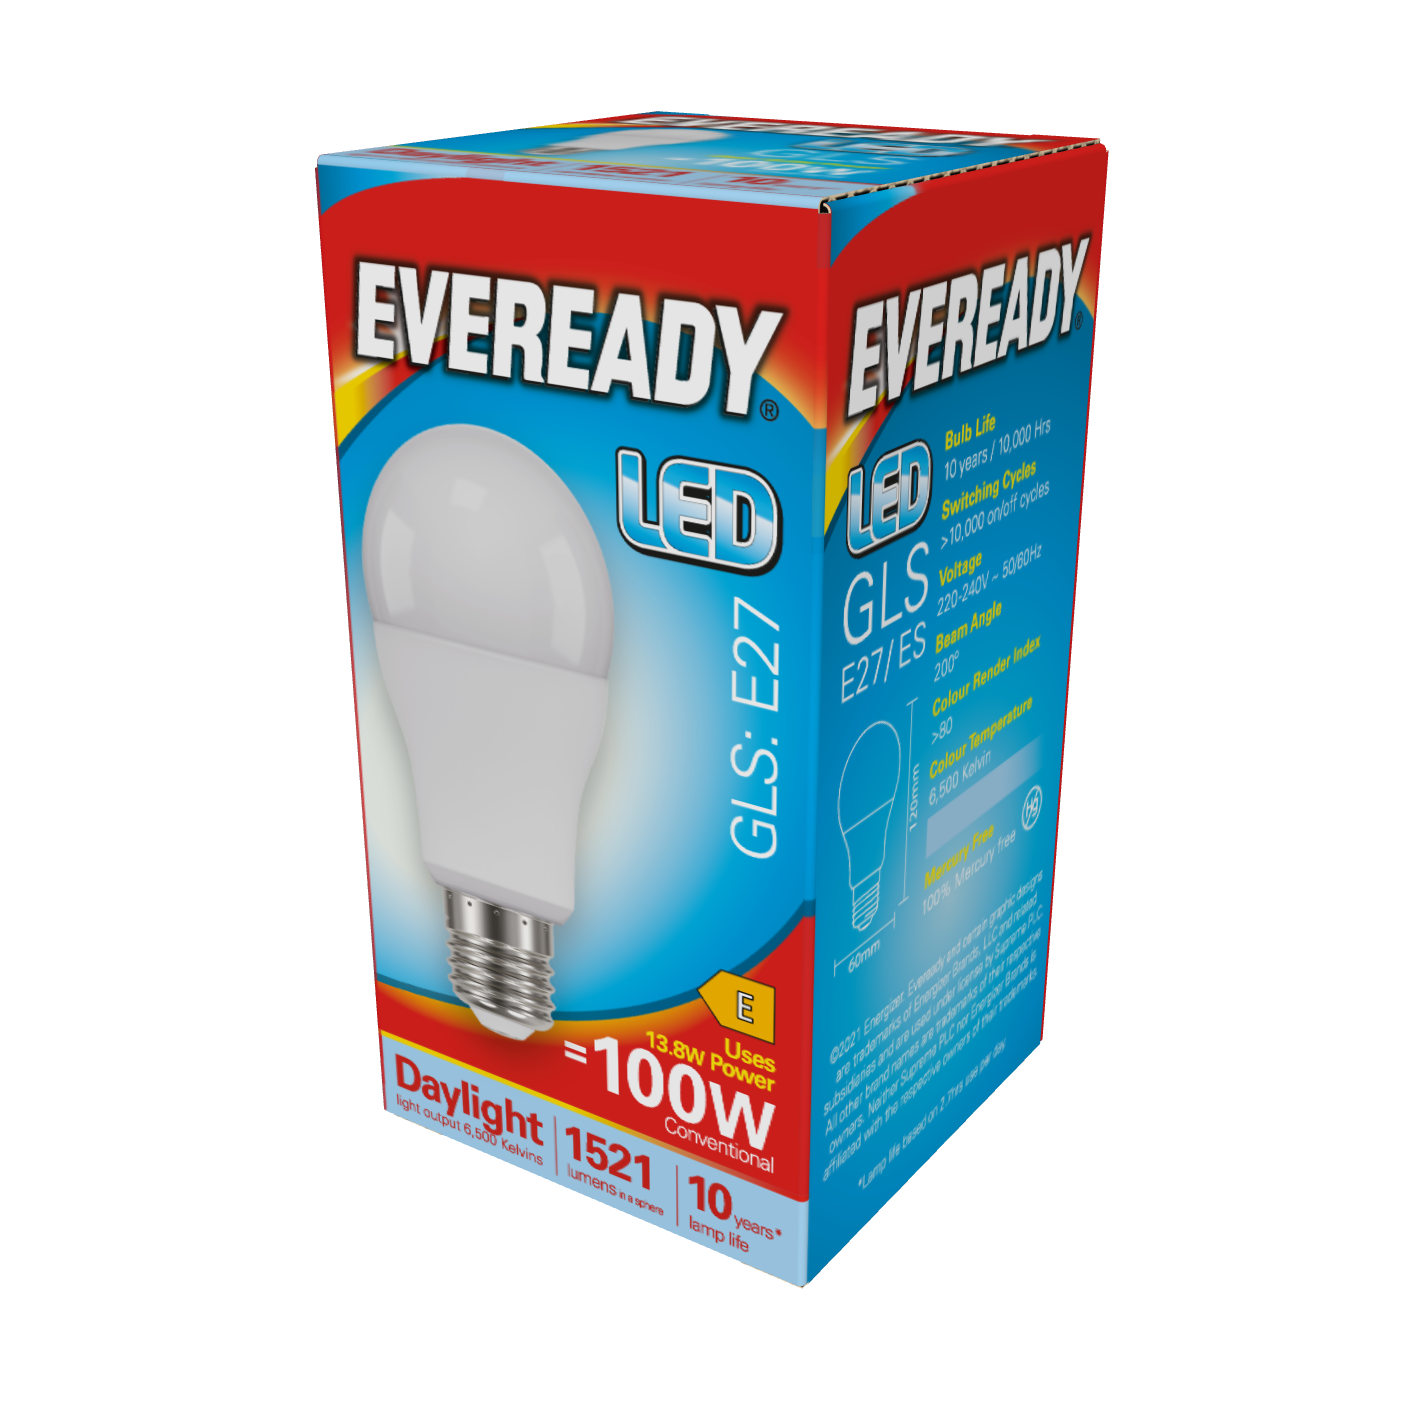 Eveready LED GLS E27 (ES) 1,521lm 13.8W 6,500K (Daylight), Box of 1